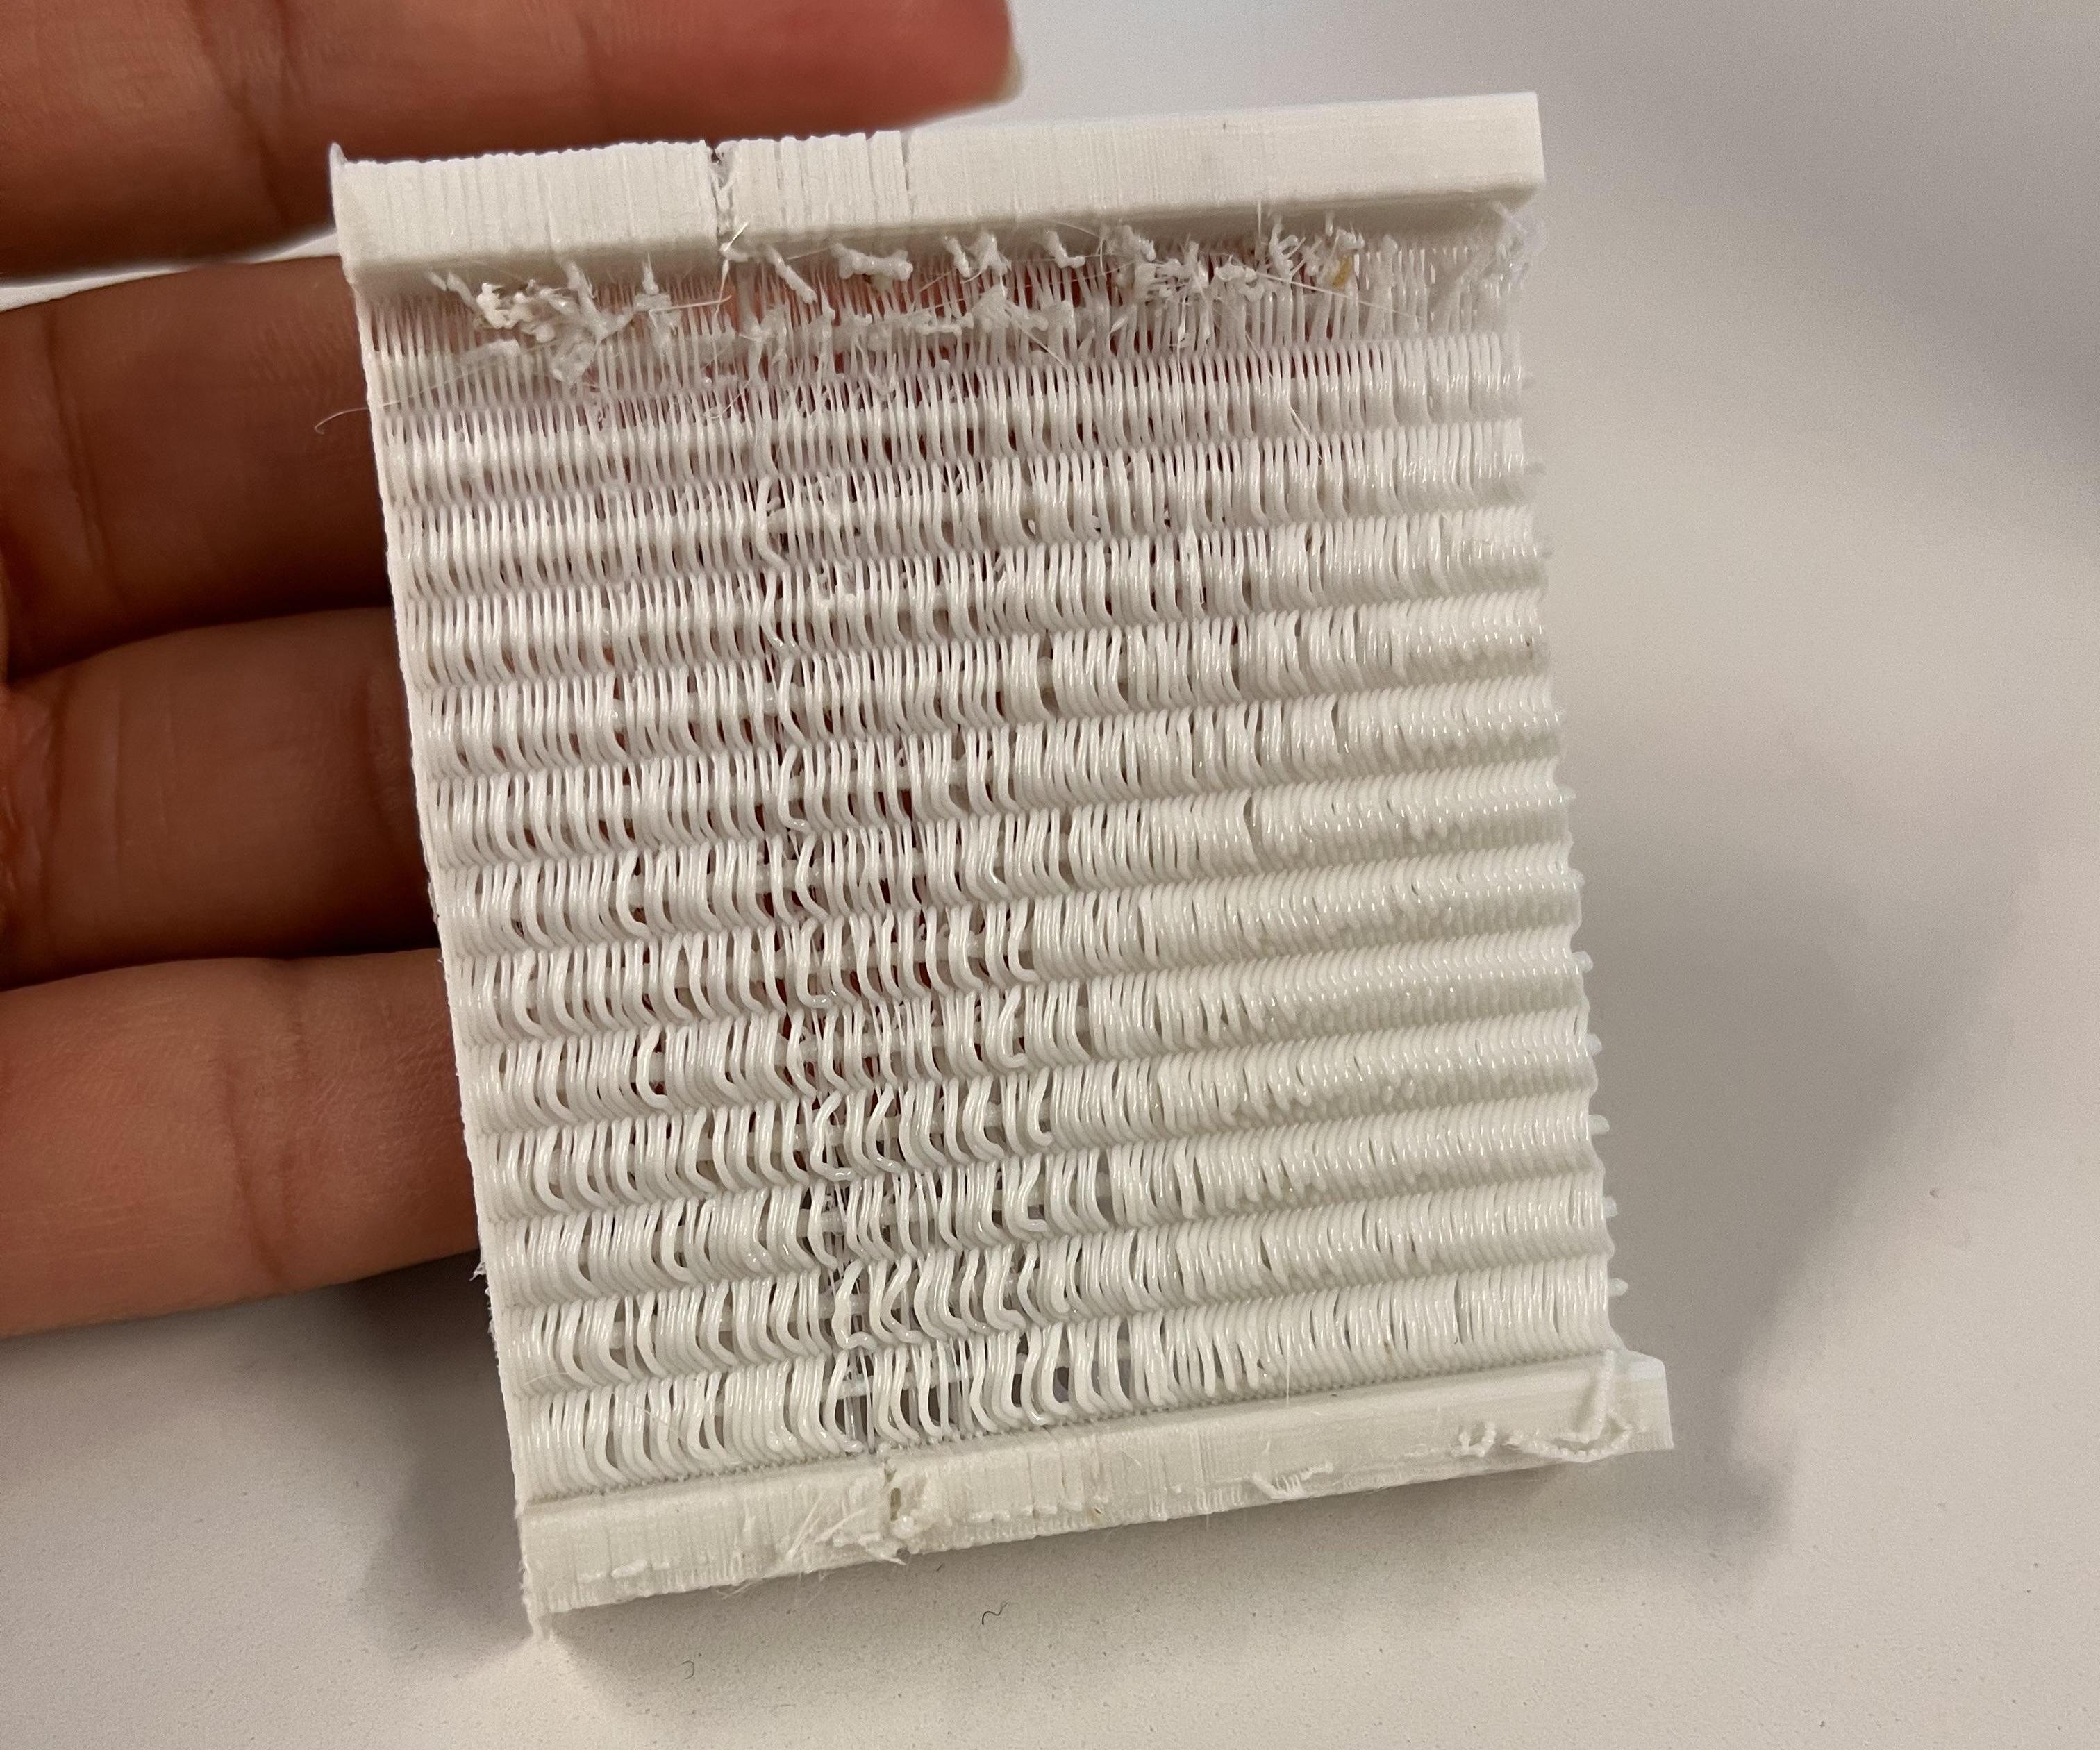 Weaving Via 3D Printer